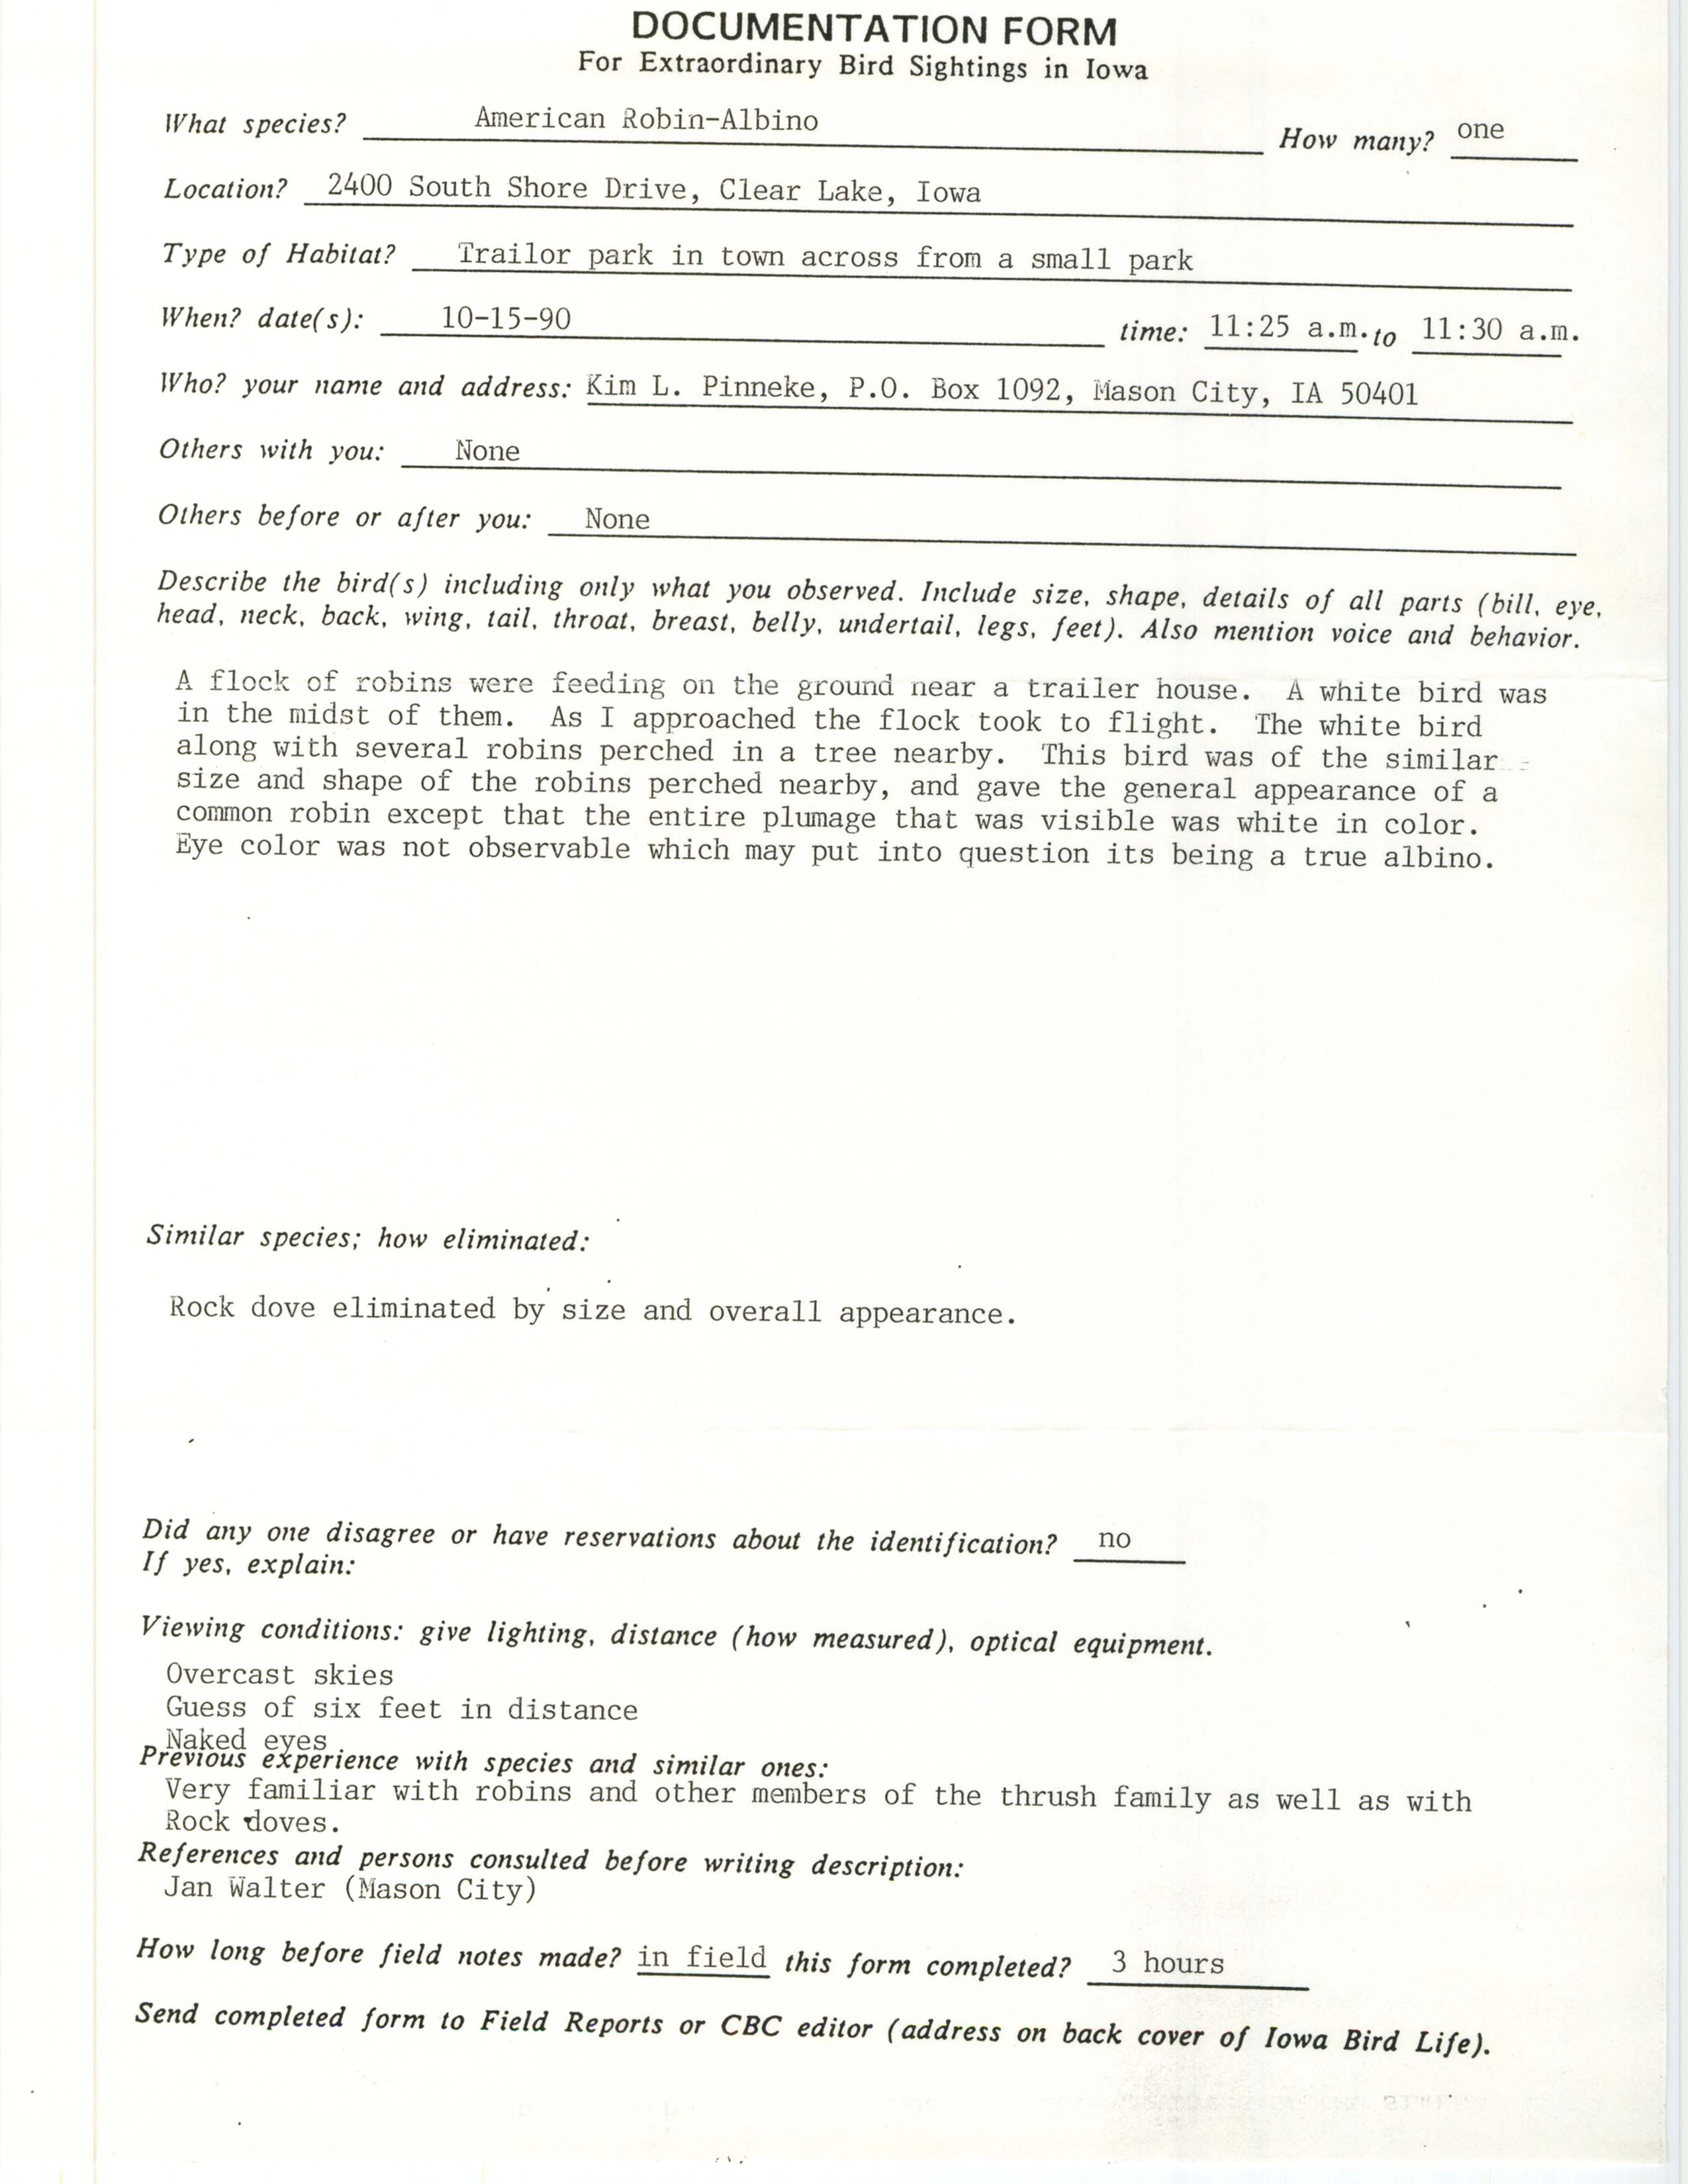 Rare bird documentation form for Albino American Robin at Clear Lake, 1990